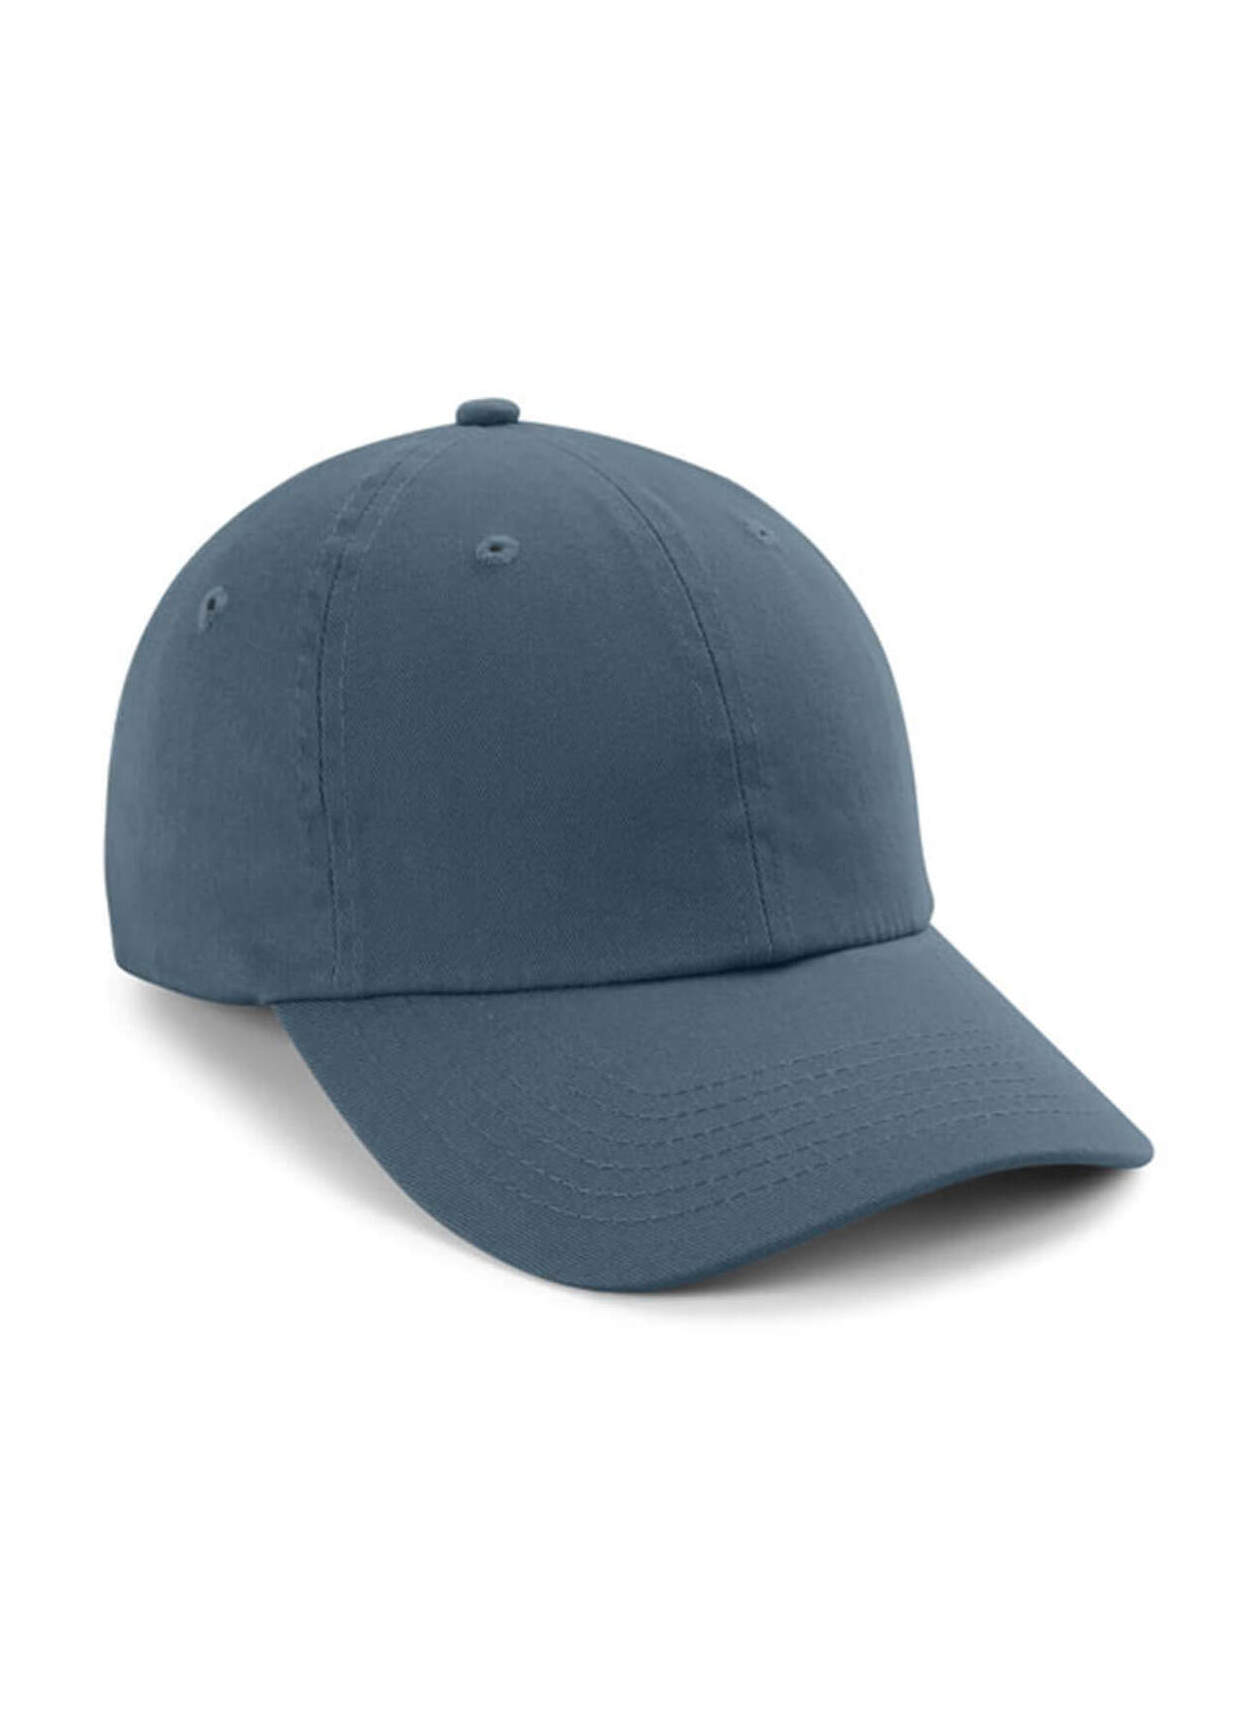 Imperial Breaker Blue The Original Buckle Hat